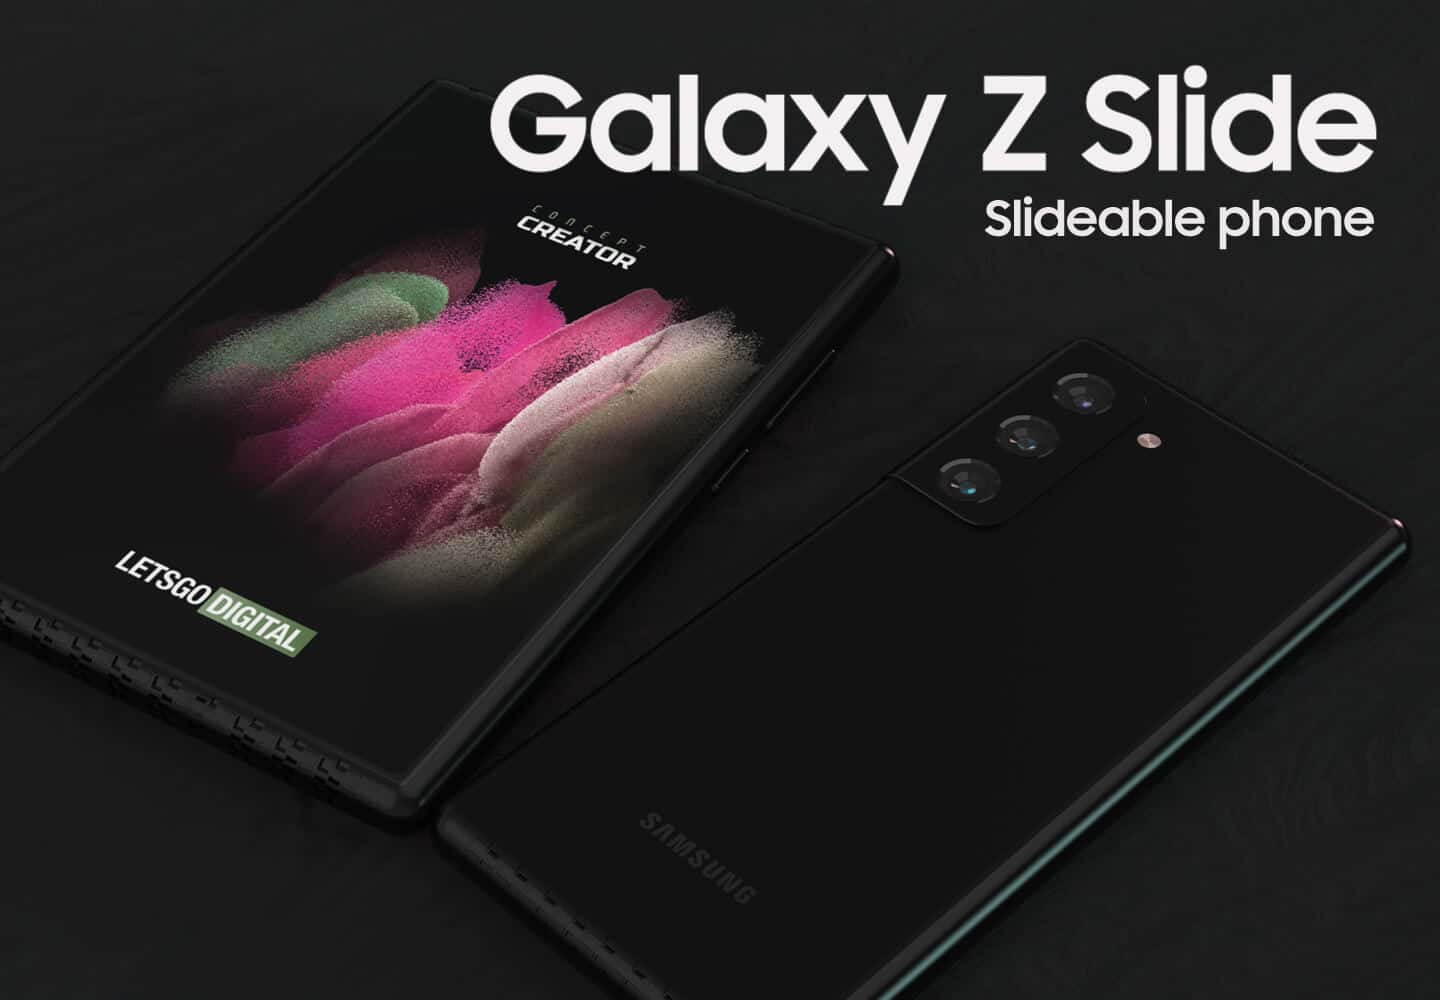 Samsung adds Samsung Galaxy Z Slide to naming mix